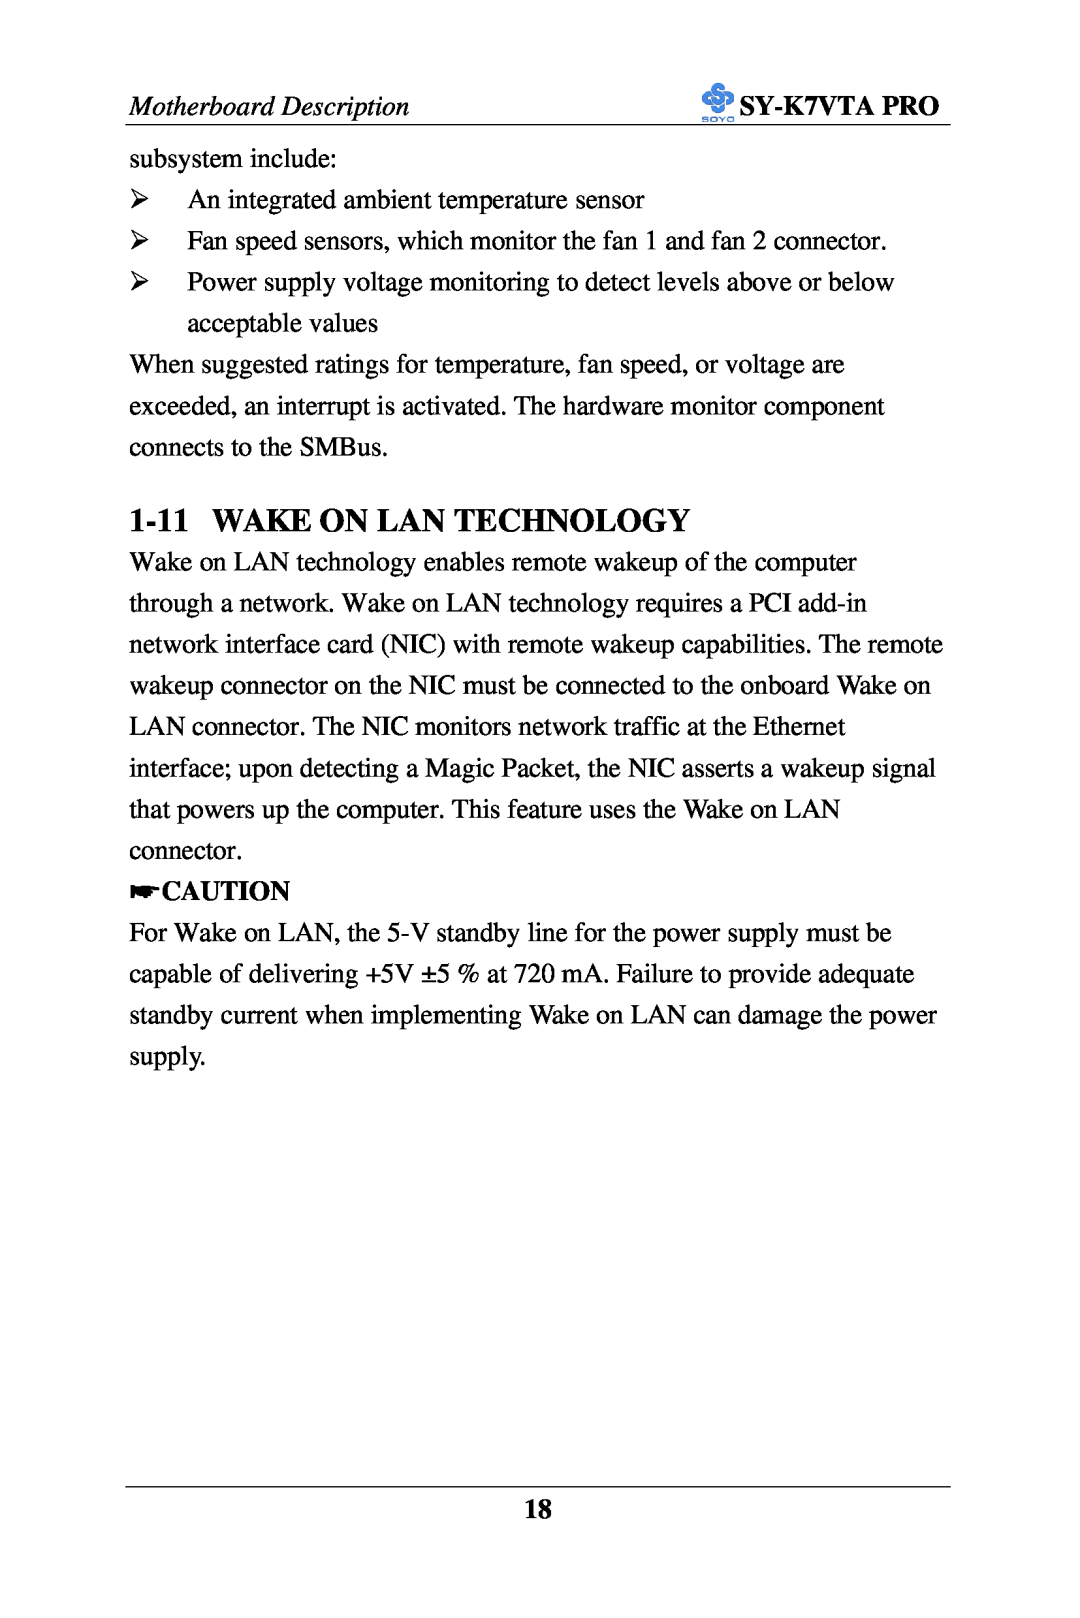 SOYO SY-K7VTA PRO user manual Wake On Lan Technology, Motherboard Description 